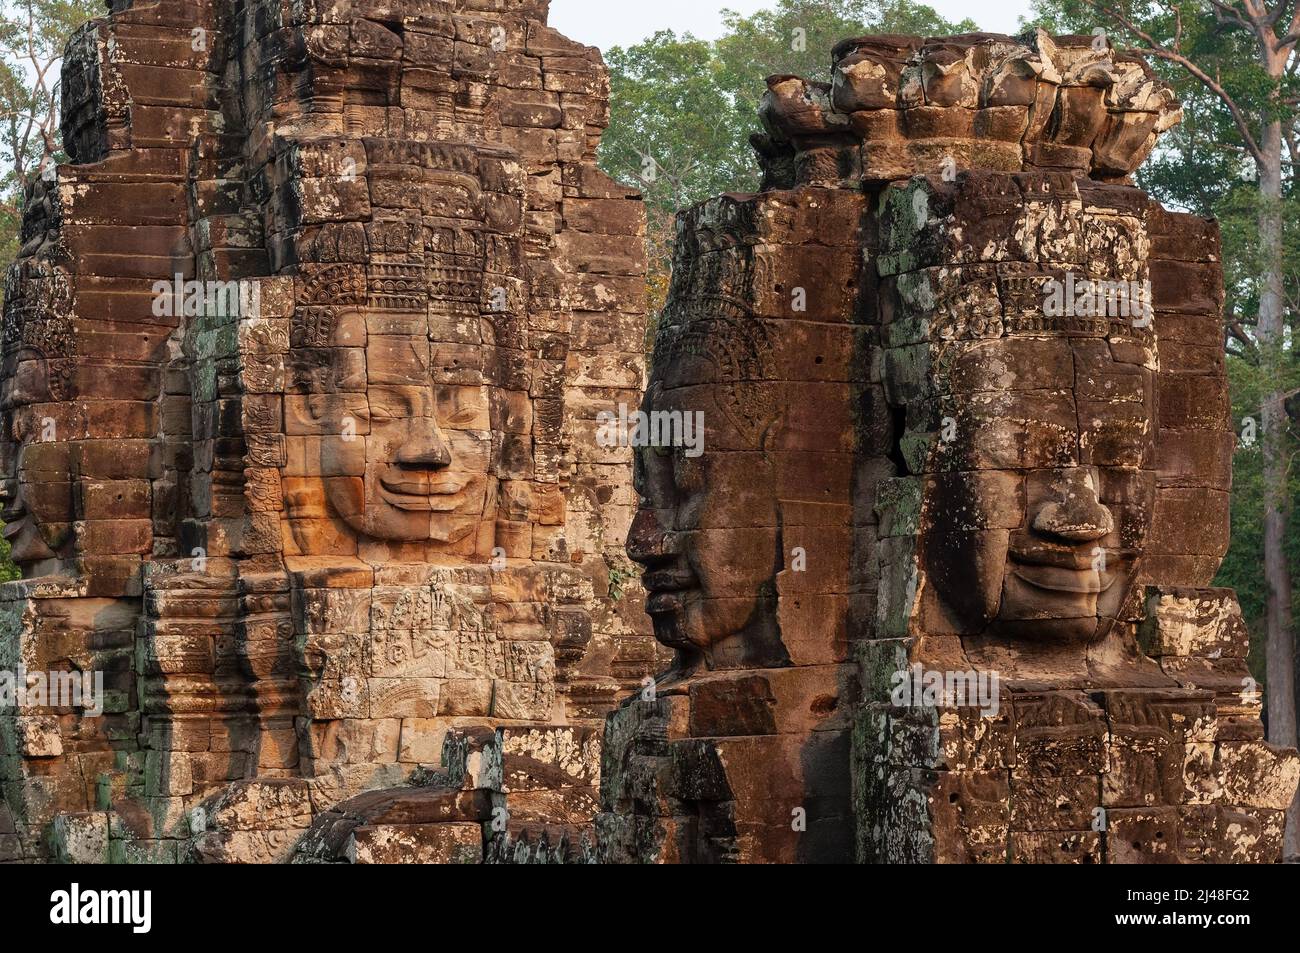 Buddha Gesichter in traditioneller khmer Architektur bei Sonnenuntergang, Bayon Tempel, Angkor, Kambodscha. Stockfoto